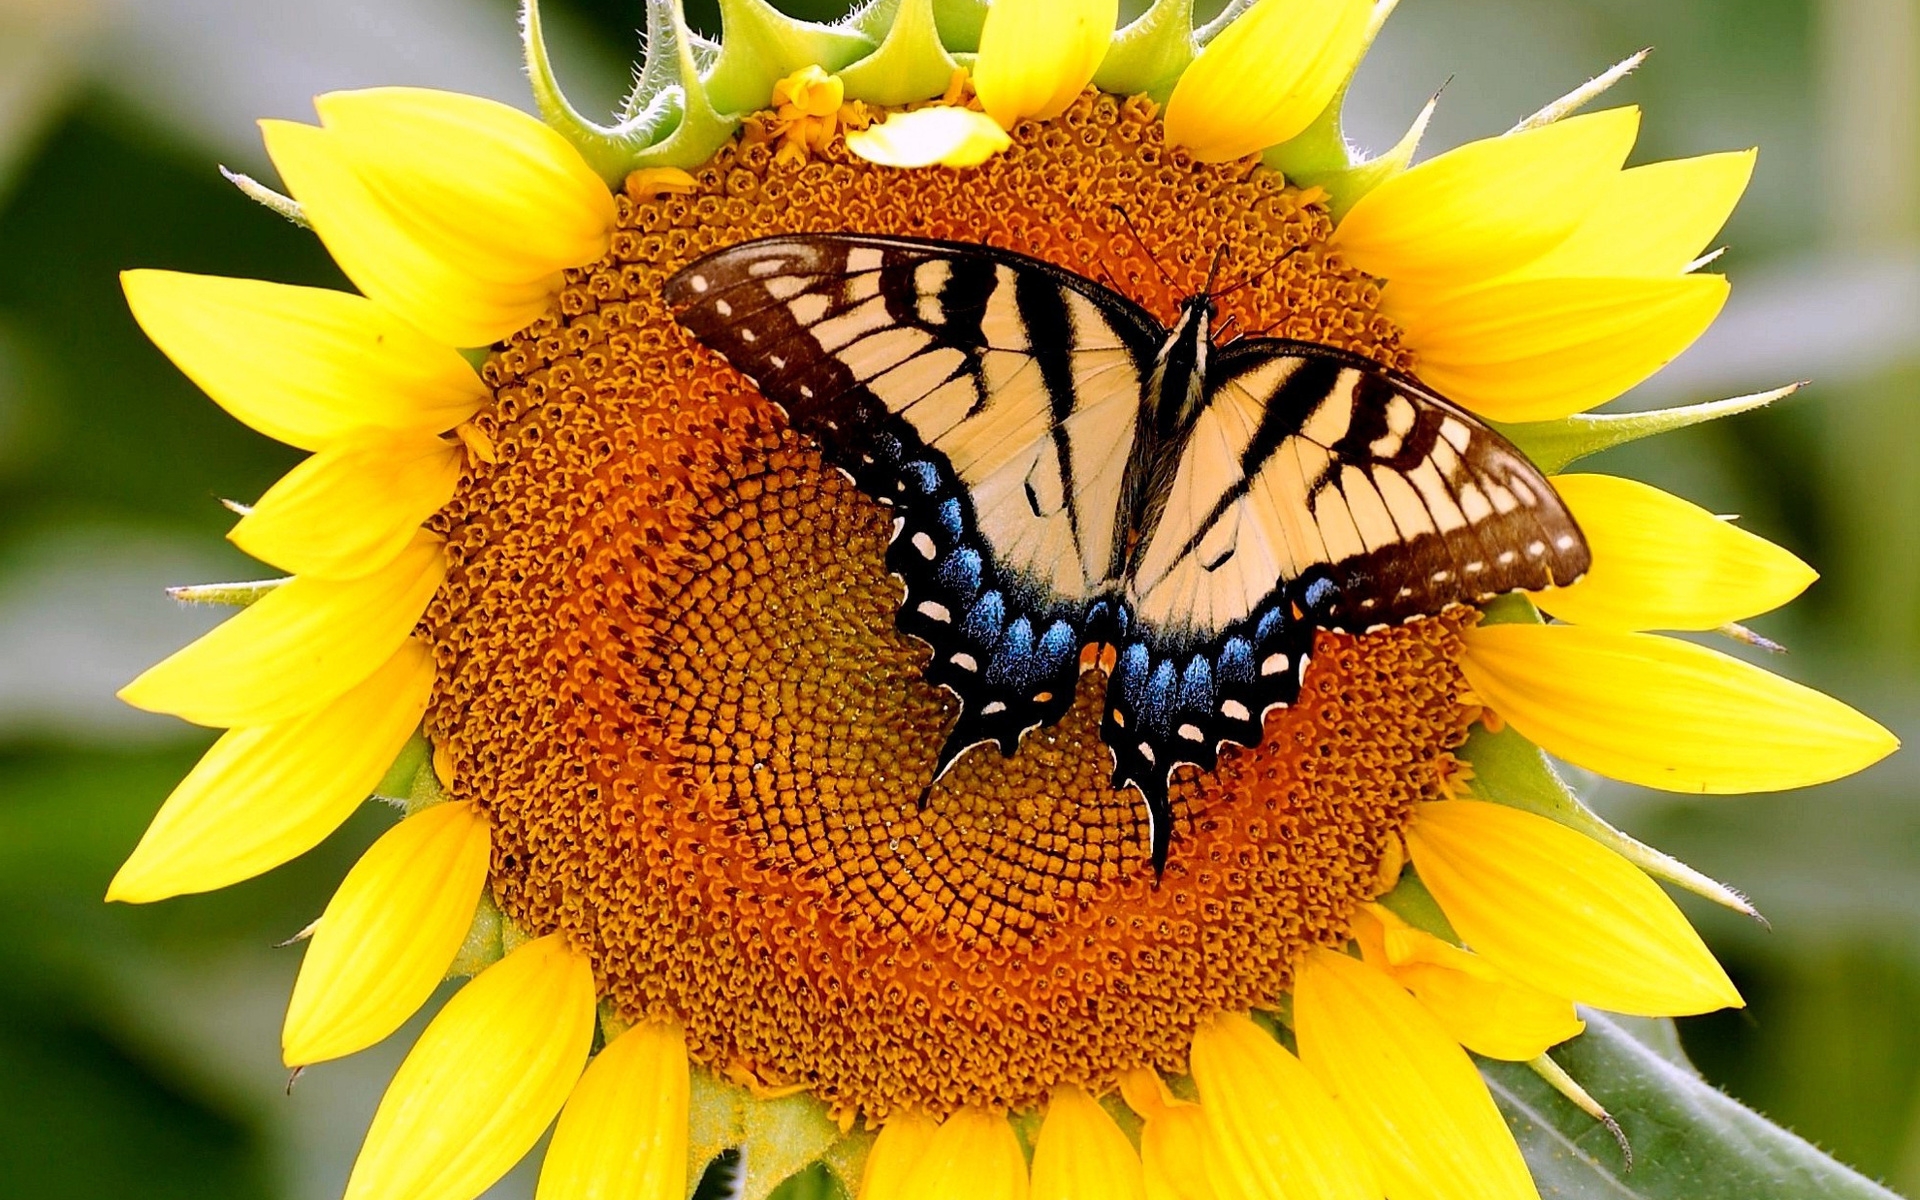 A butterfly on a sunflower.